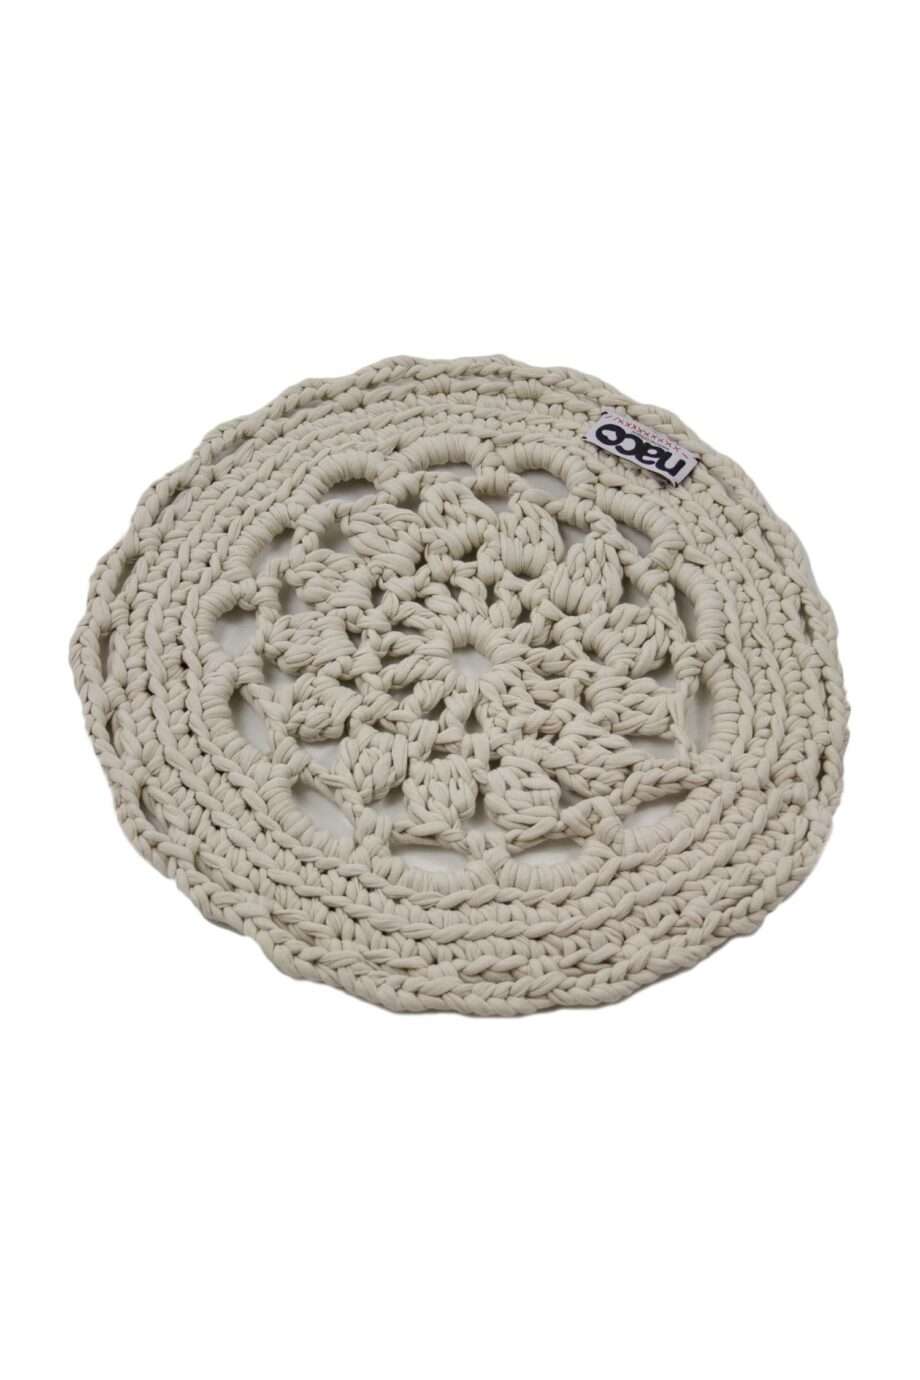 rosette linen crochet cotton placemat small